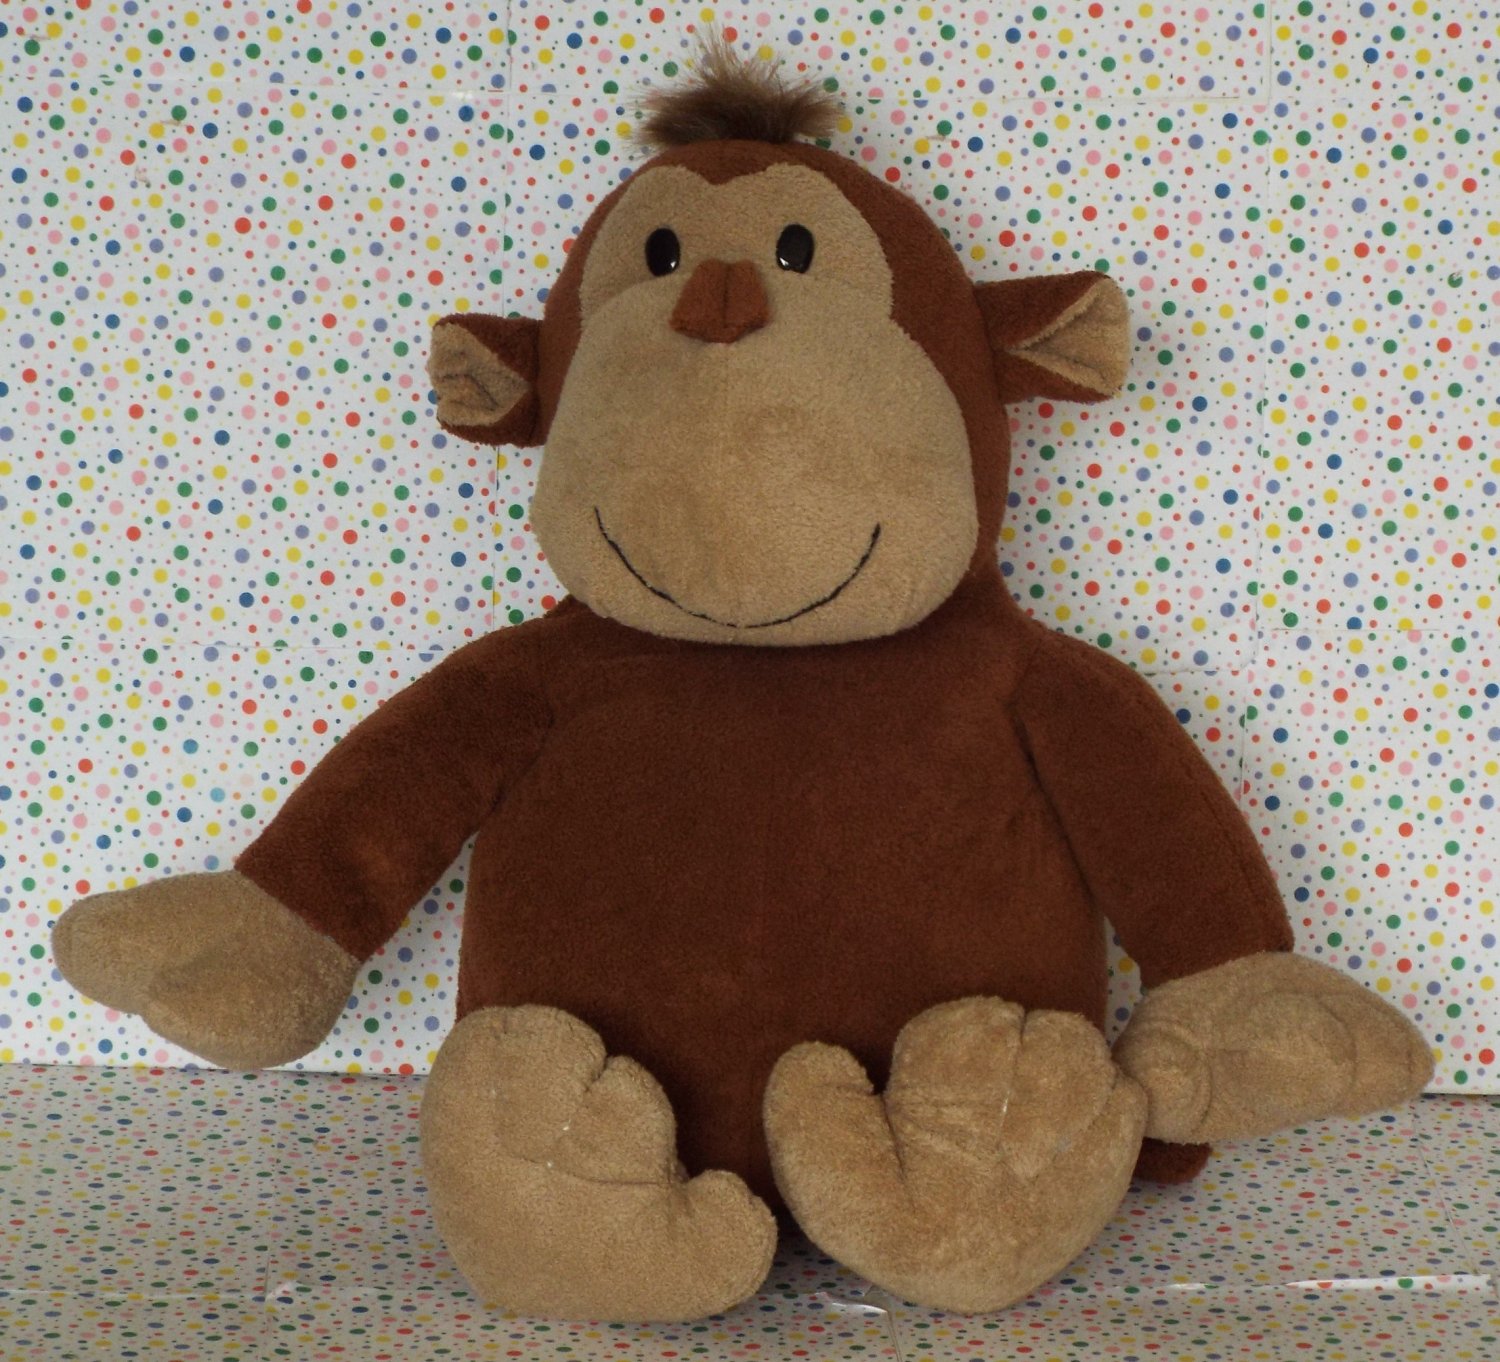 toys r us monkey stuffed animal